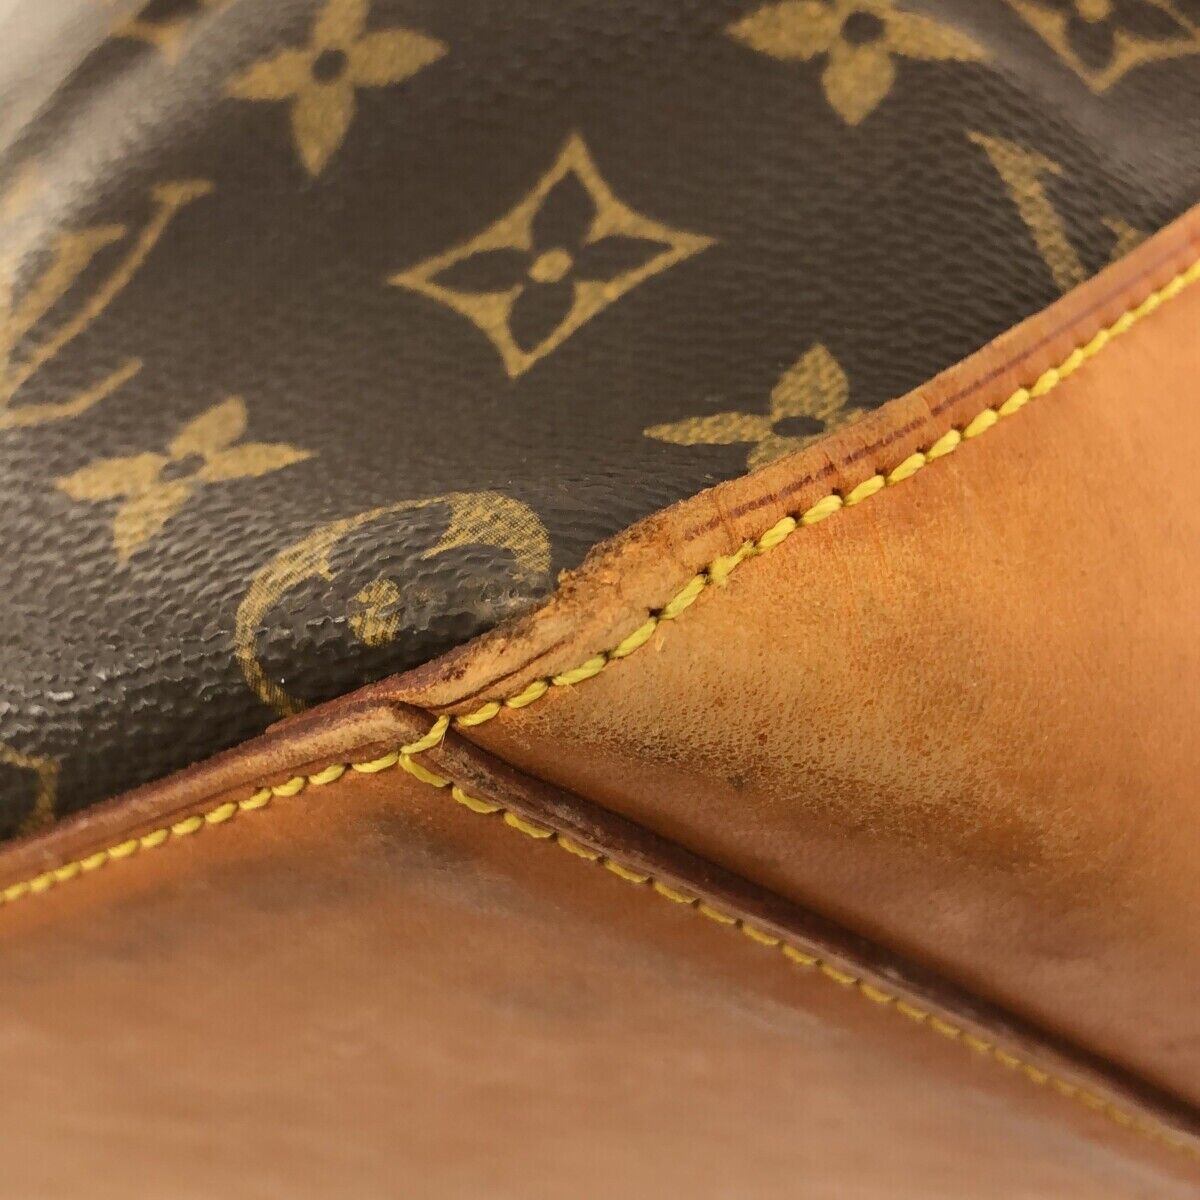 Louis Vuitton Cabas Mezzo Tote Brown Leather